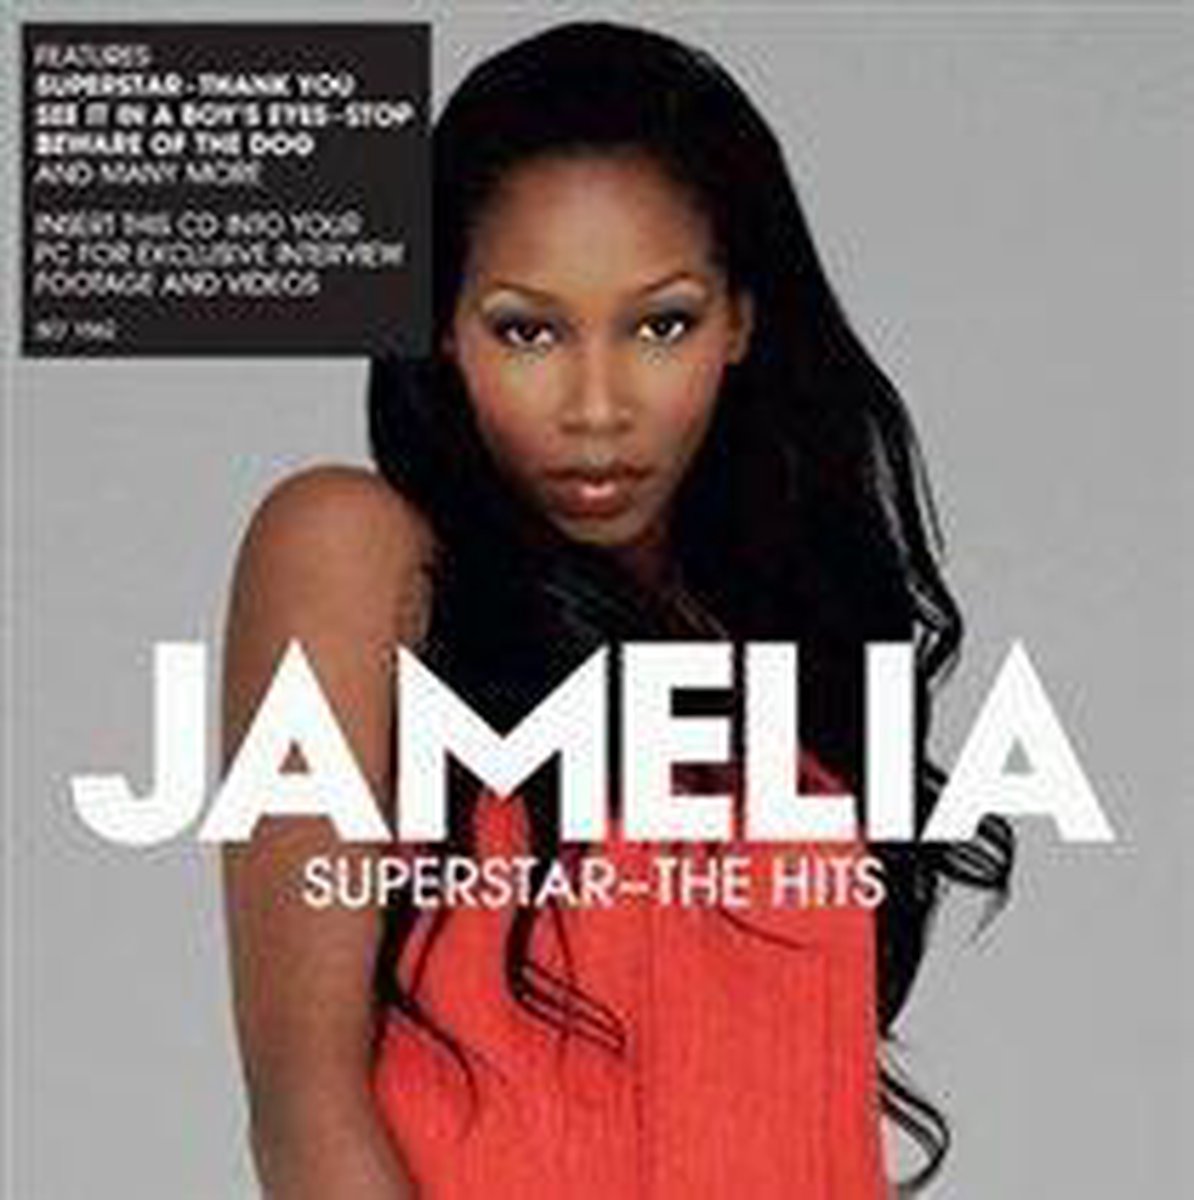 Superstar -The Hits- - Jamelia